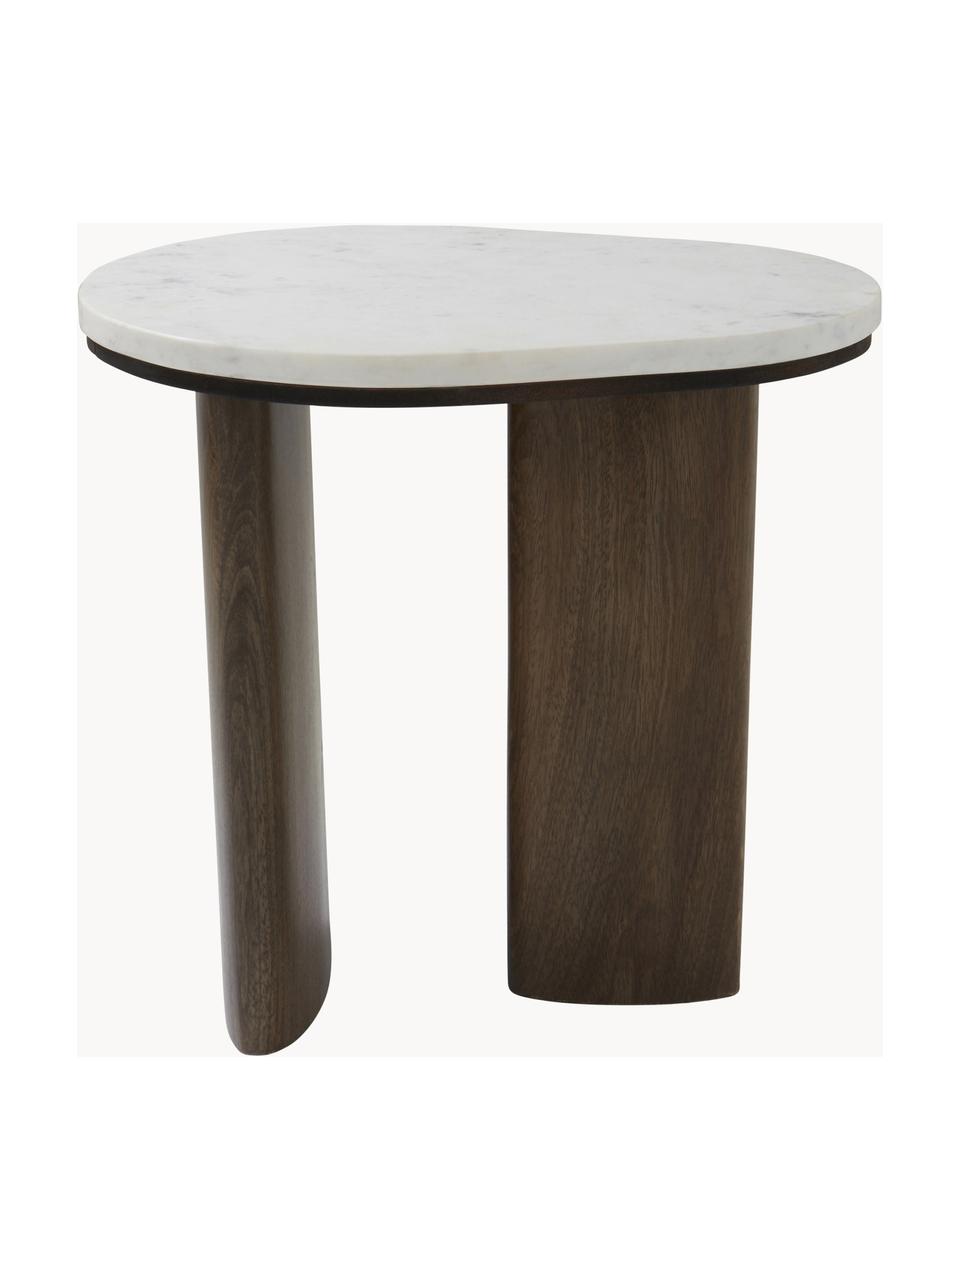 Beistelltisch Vaiano aus Marmor und Mangoholz, Tischplatte: Marmor, Beine: Mangoholz, Grau, marmoriert, Mangoholz, B 50 x H 45 cm